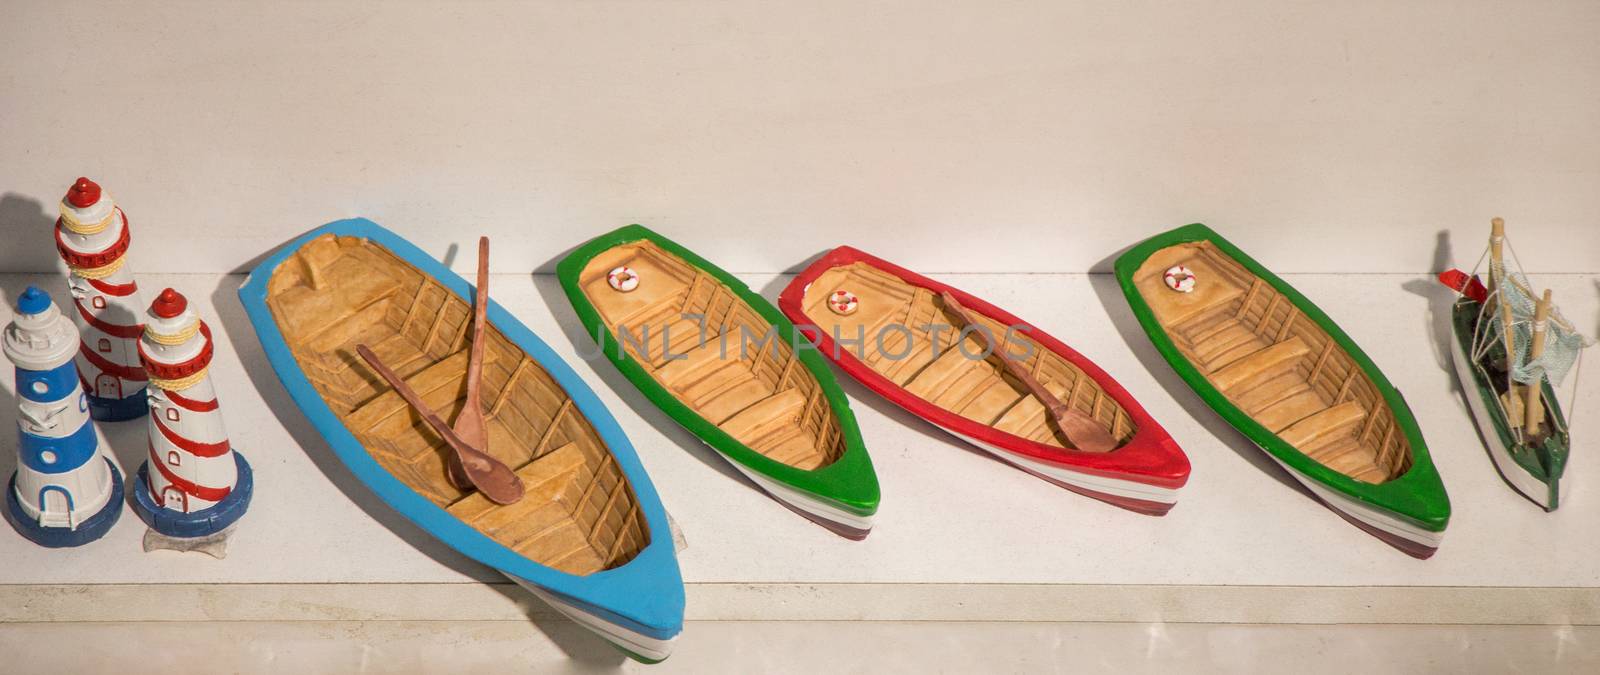 Set of little colorful model boats by berkay